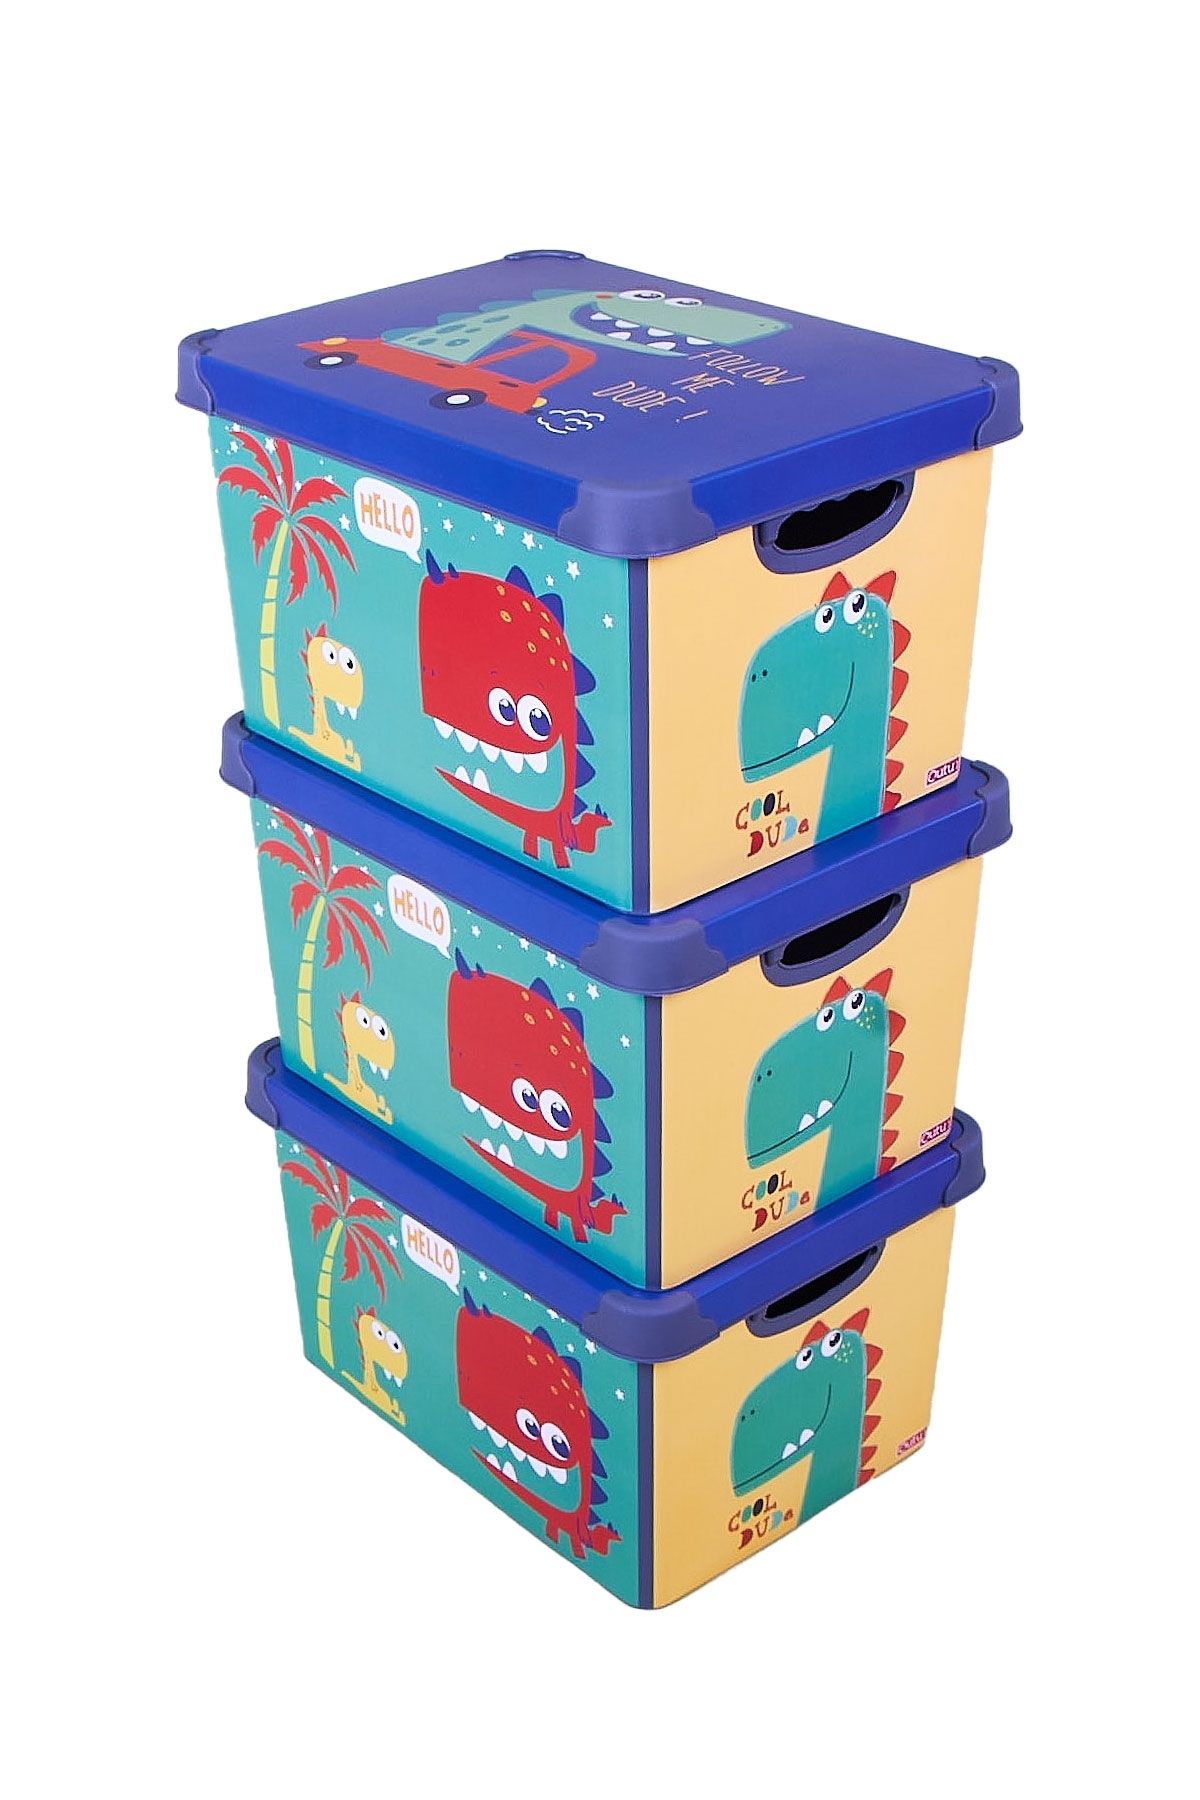 QUTU Style Box Dude Dekoratif Oyuncak Kutu Seti - 3x 17litre